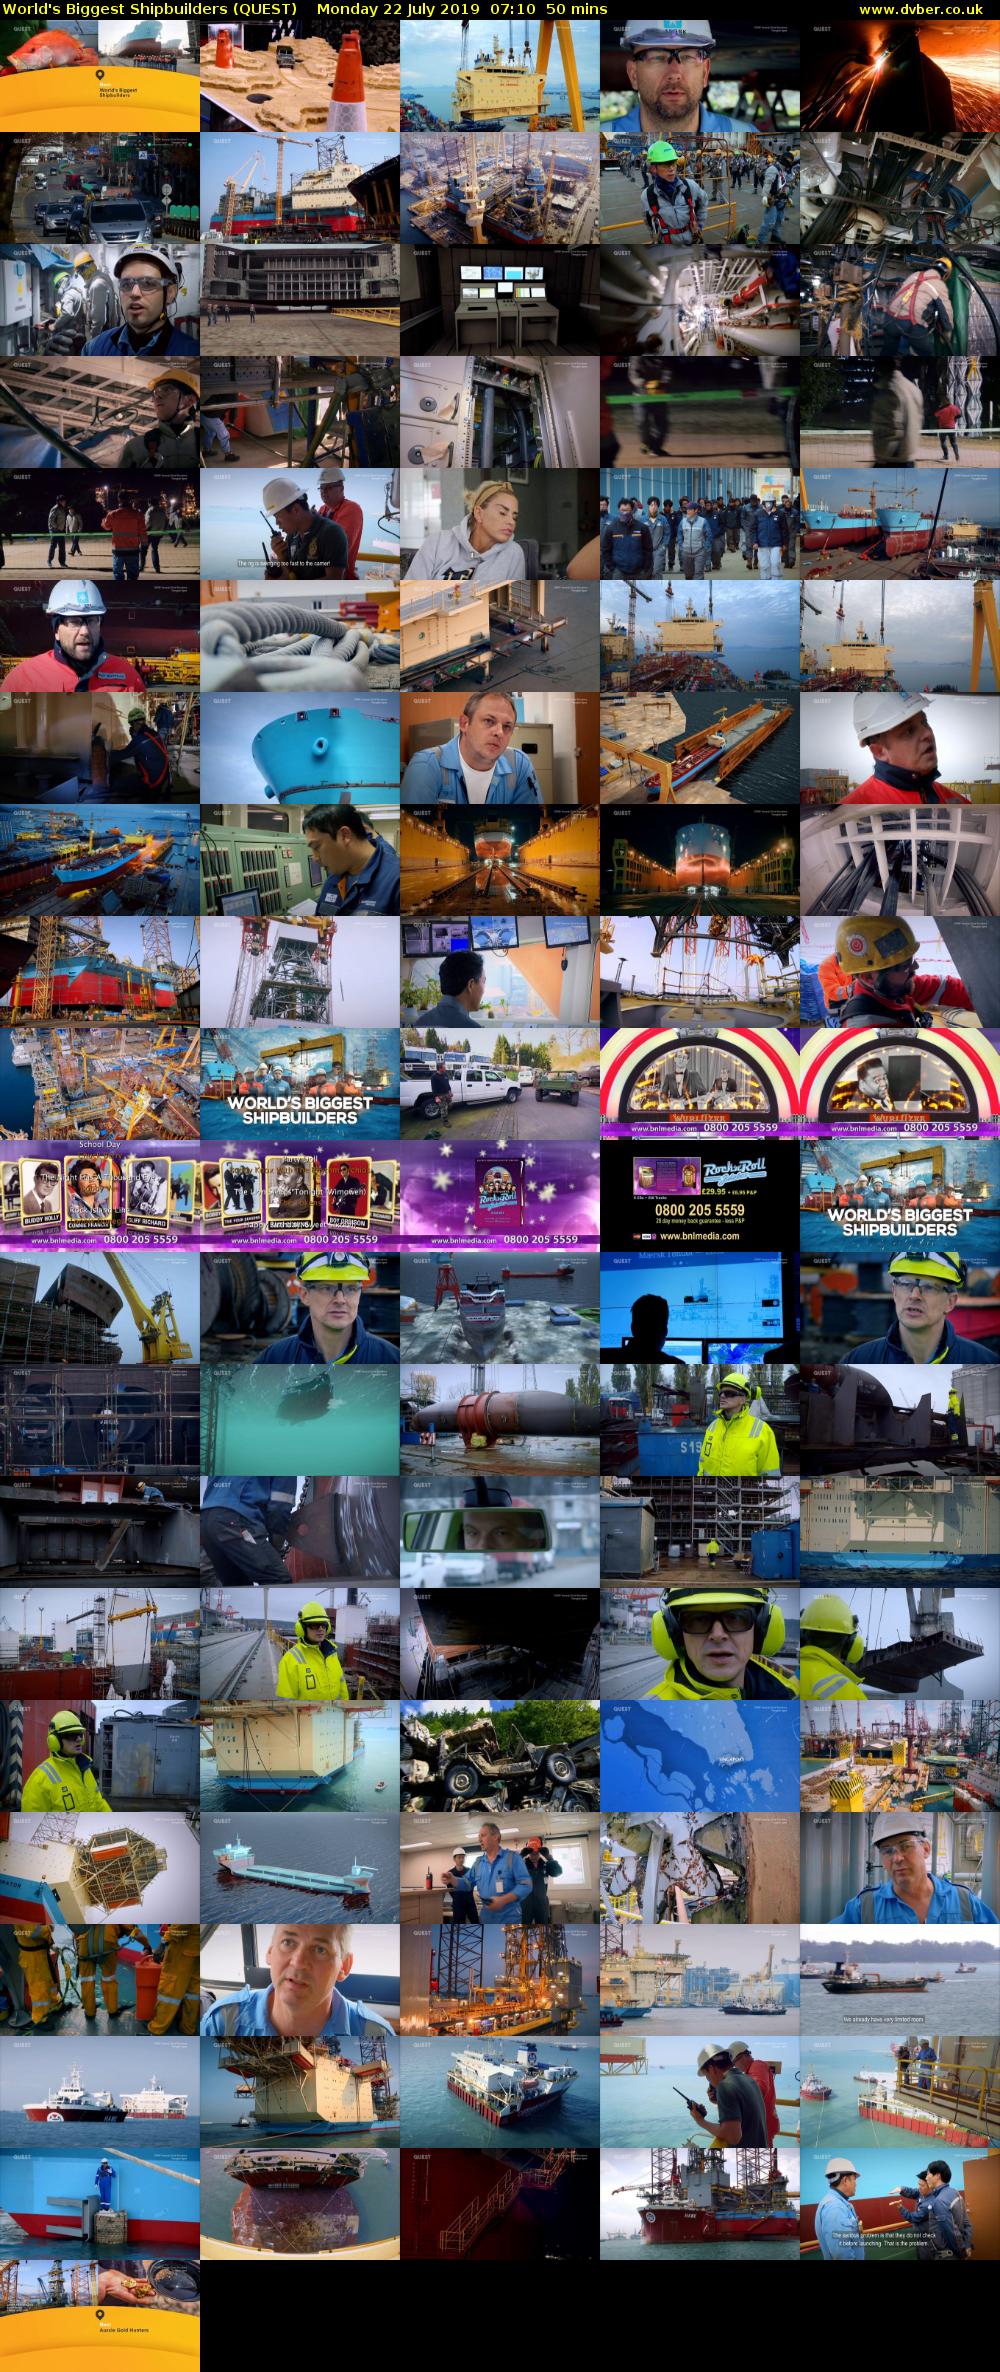 World's Biggest Shipbuilders (QUEST) Monday 22 July 2019 07:10 - 08:00